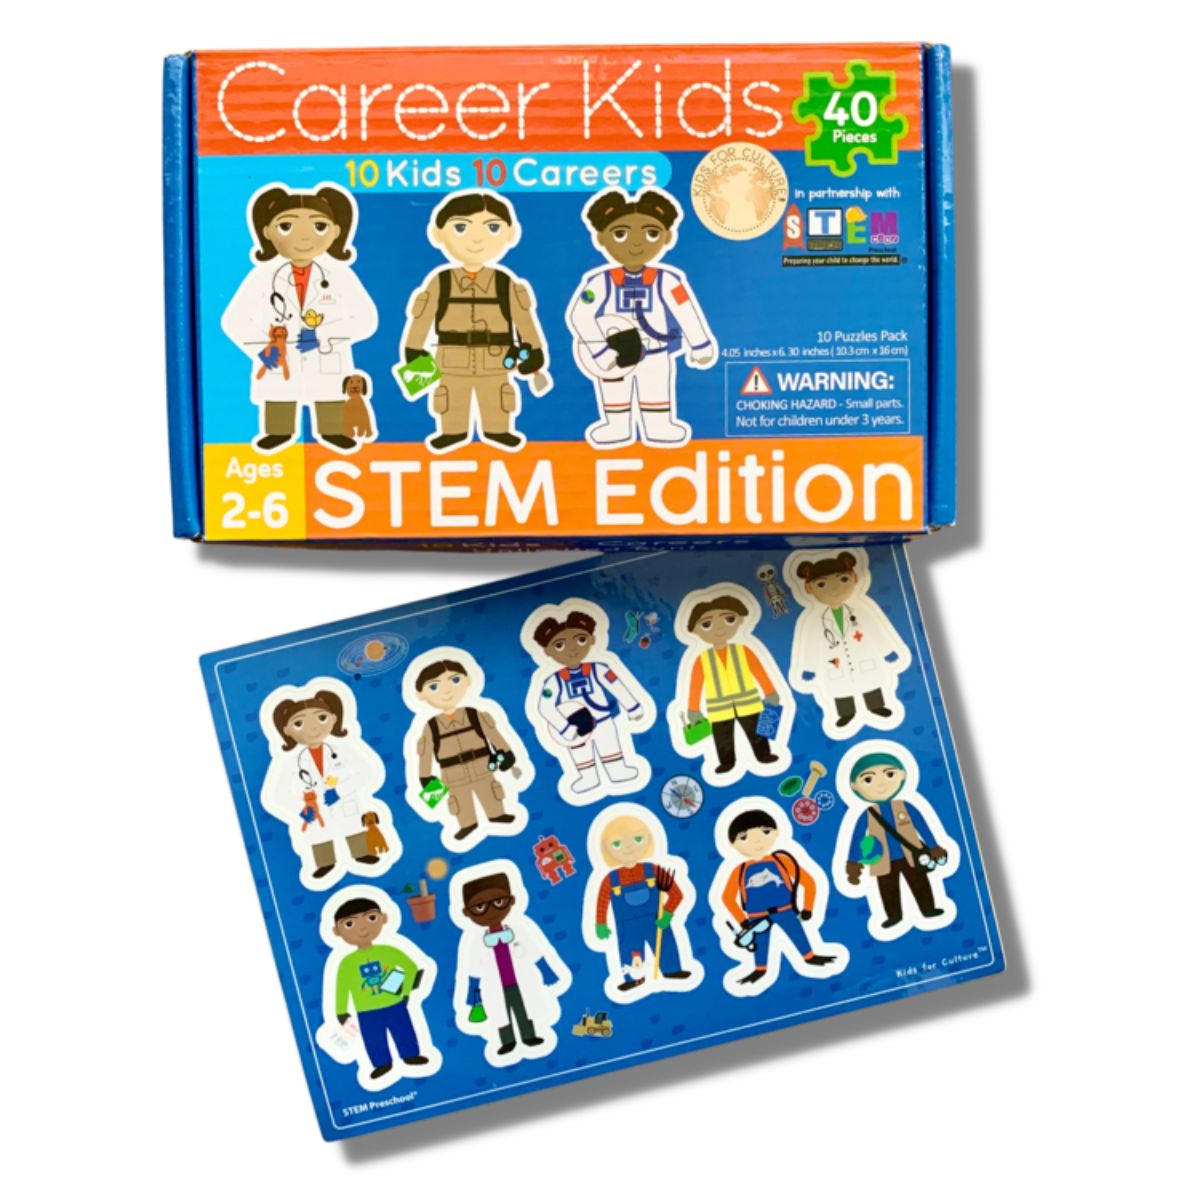 career kids stem edition blue box on white background